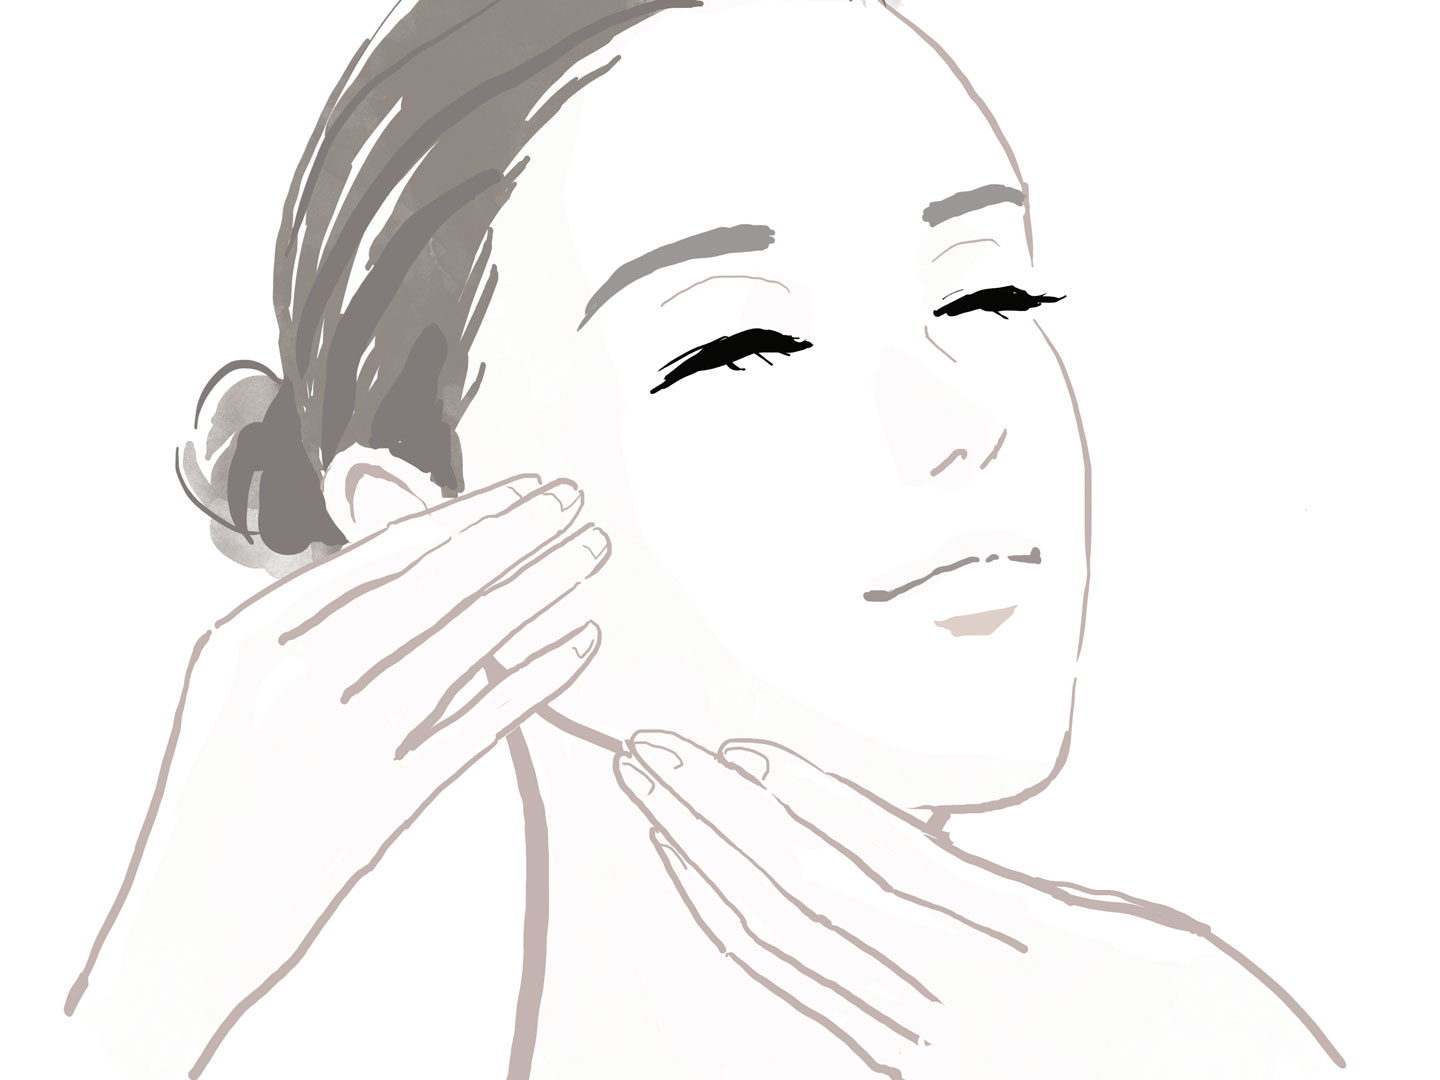 Face Massage